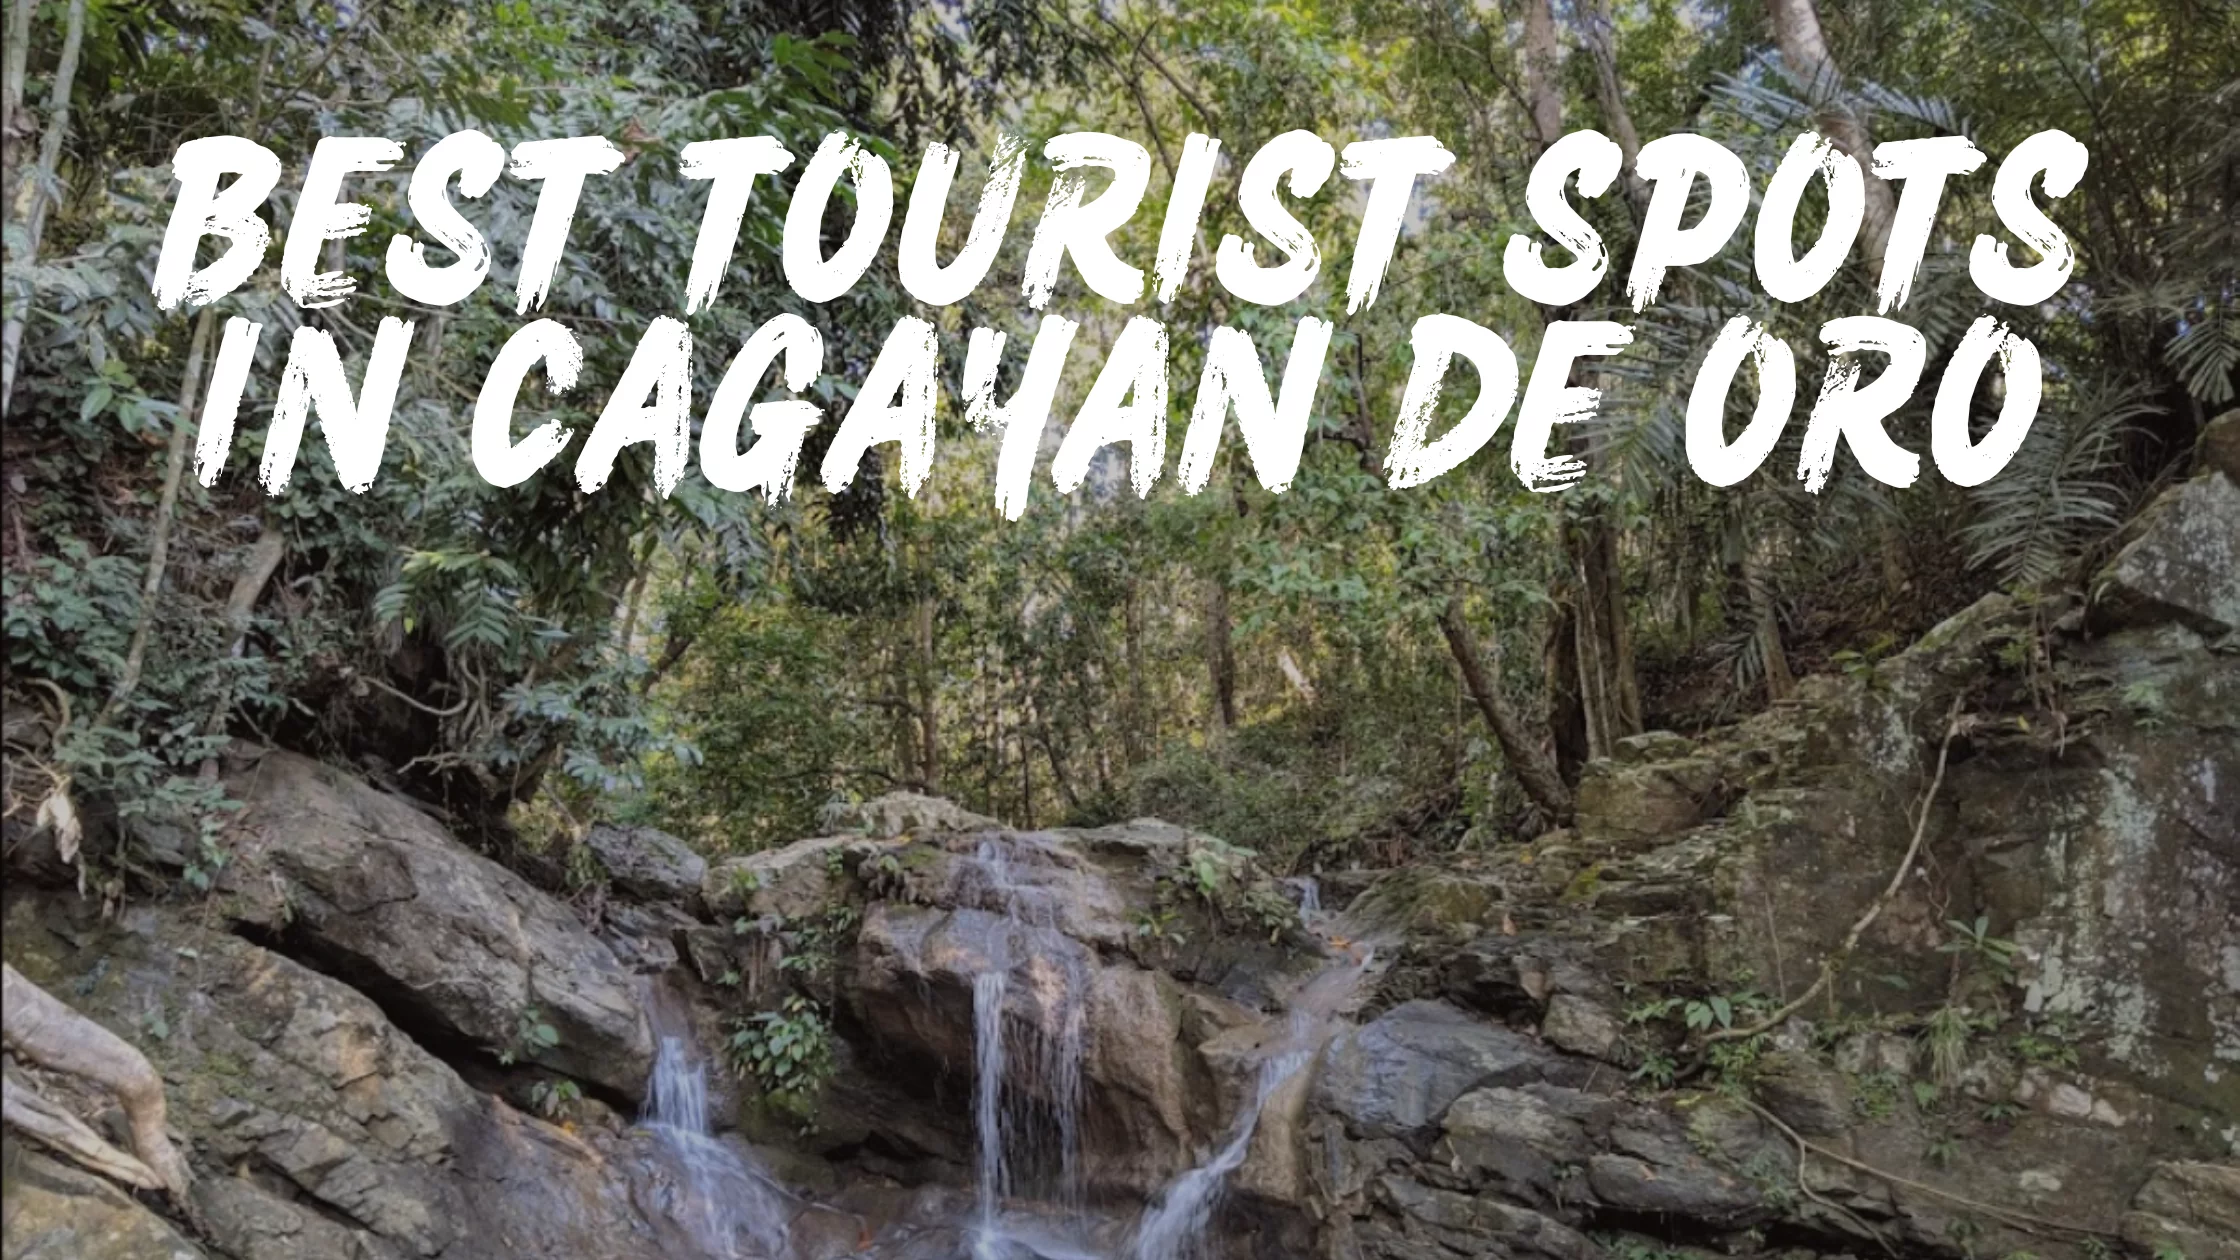 Best Tourist Spots in Cagayan de Oro